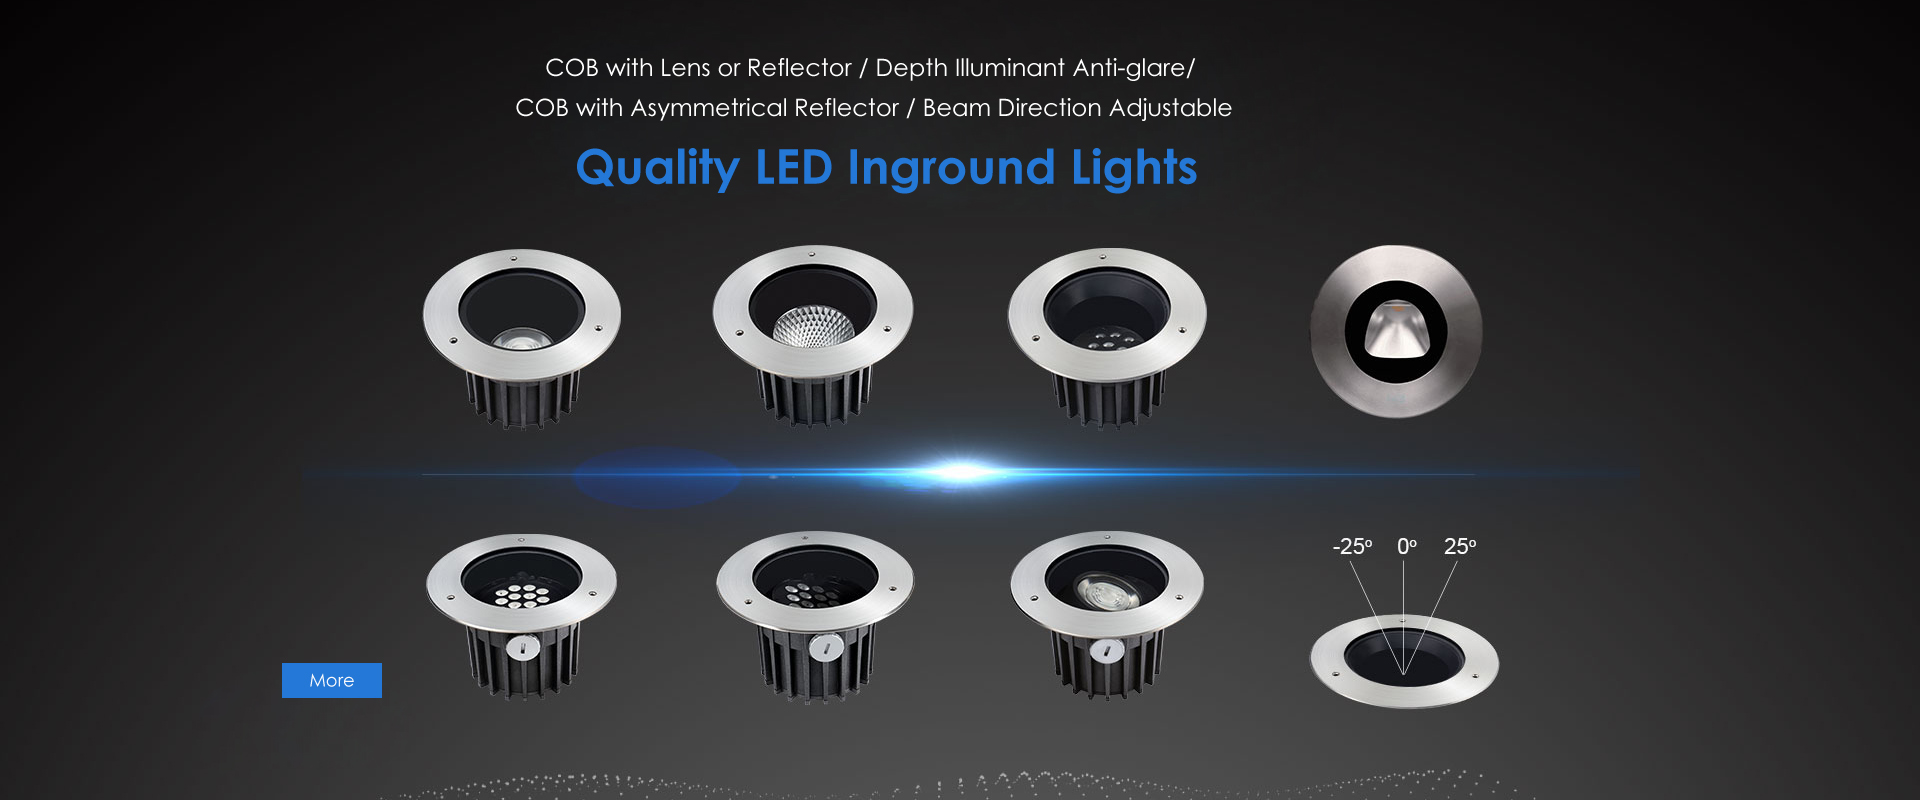 Quality LED Inground Lights